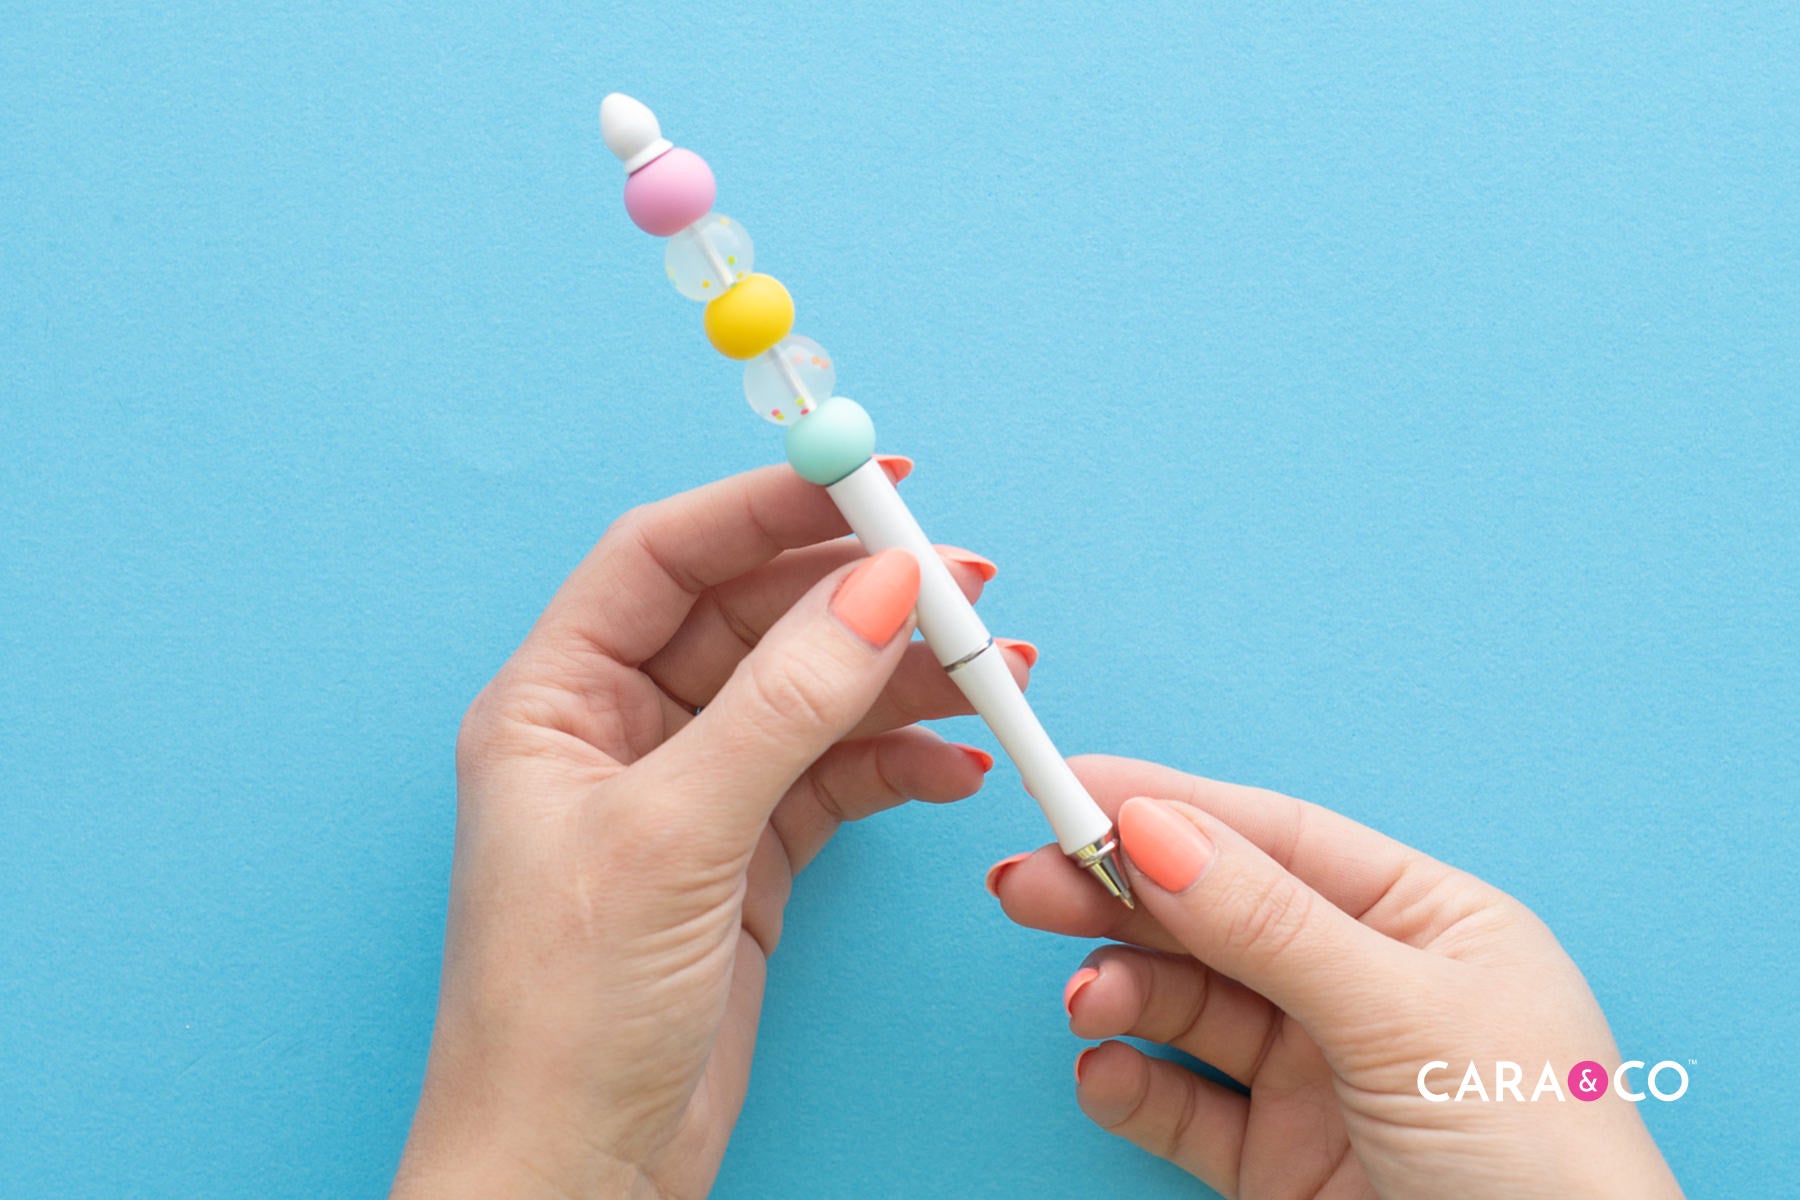 Beadable Pens How To  Read Cara & Co's Craft Blog – Cara & Co.